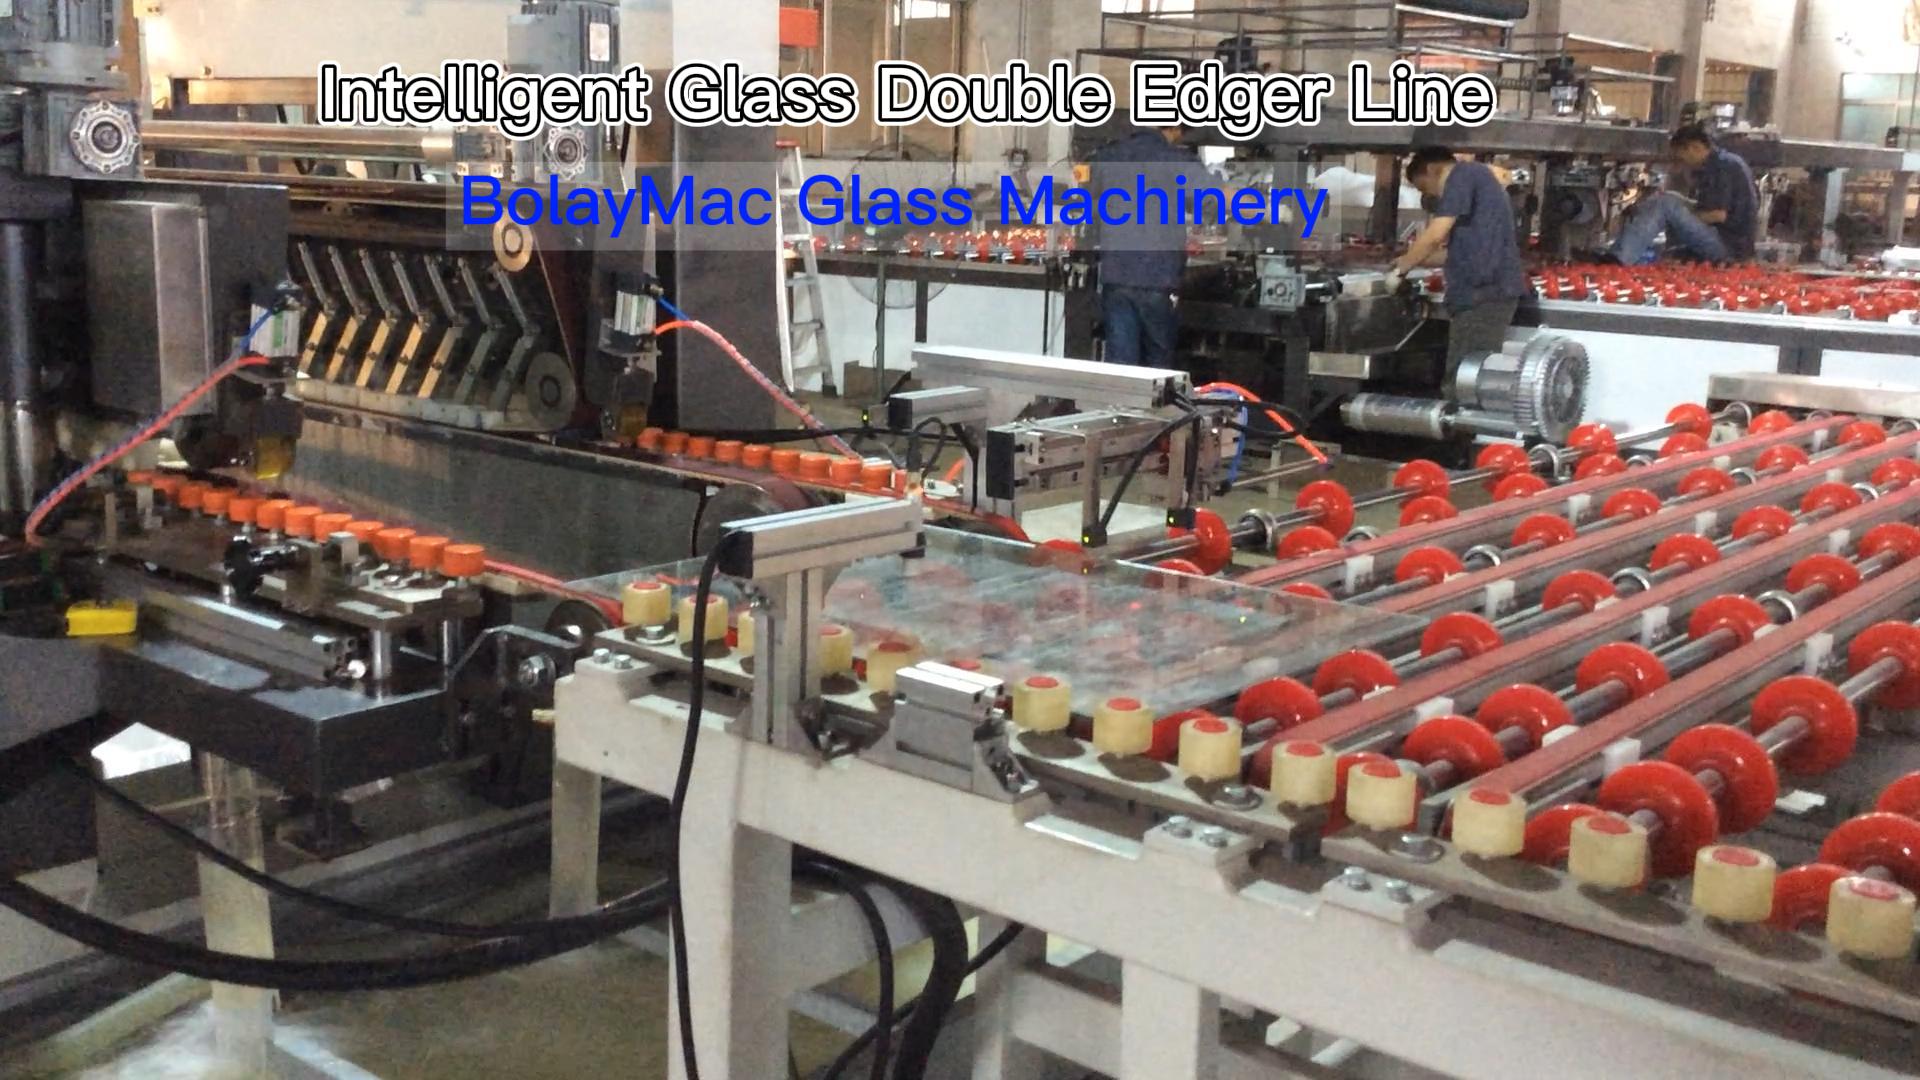 Glass Double Edging Machine